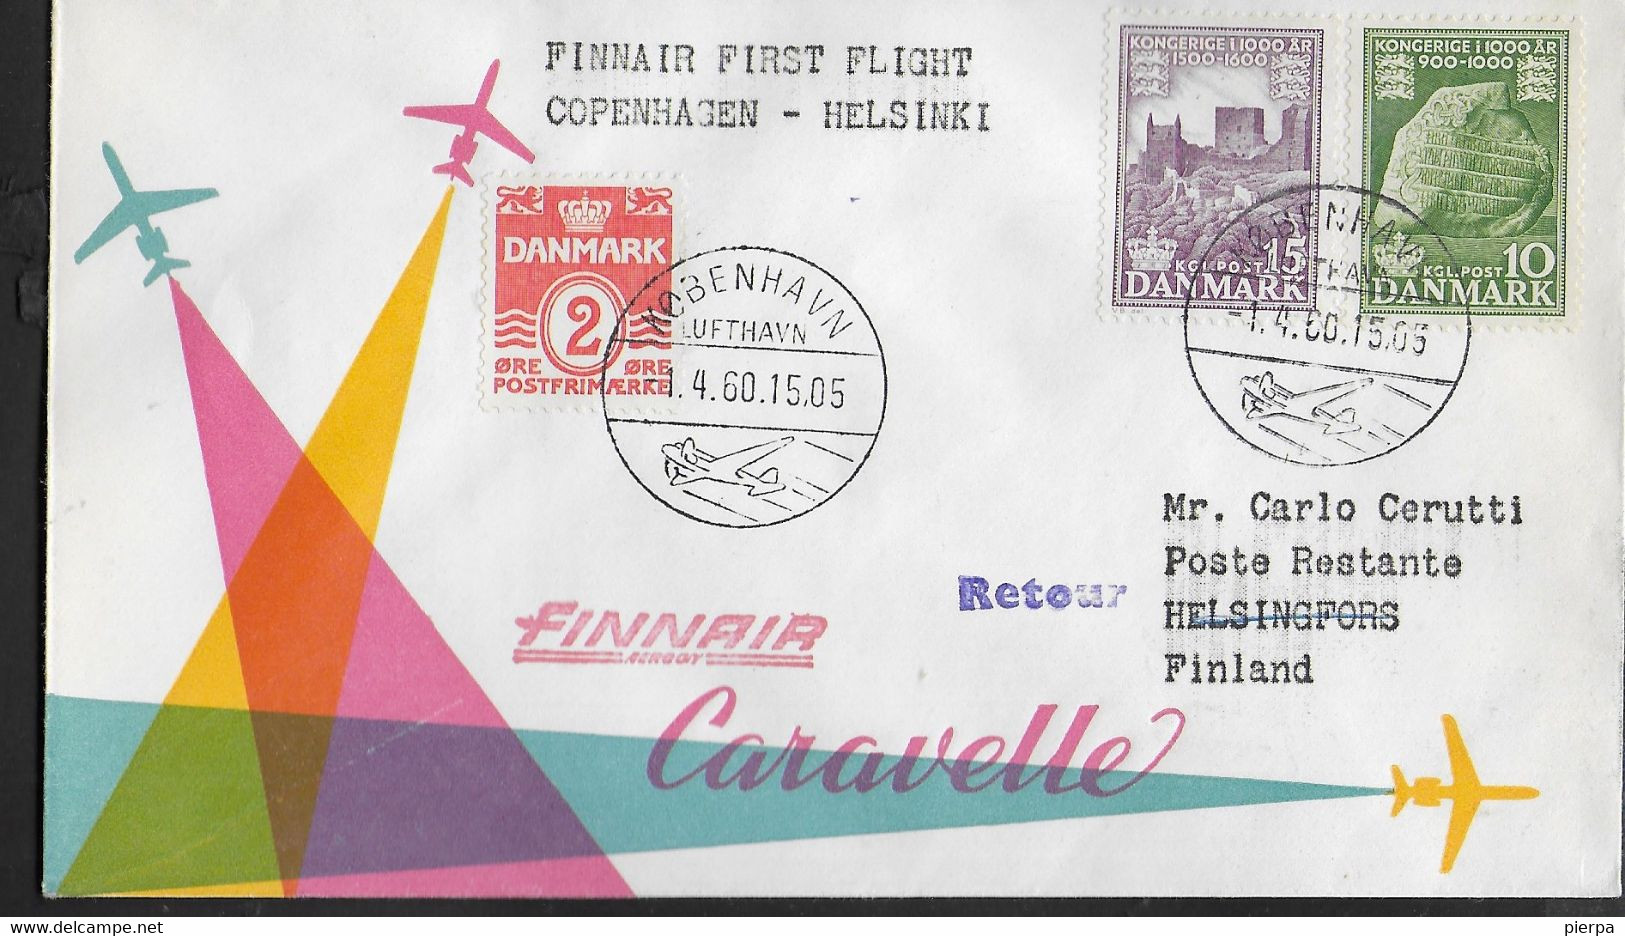 FINLAND - PRIMO VOLO - FIRST FLIGHT FINNAIR - KOBENHAVN- HELSINKI - 1.4.60 - SU BUSTA UFFICIALE - Covers & Documents